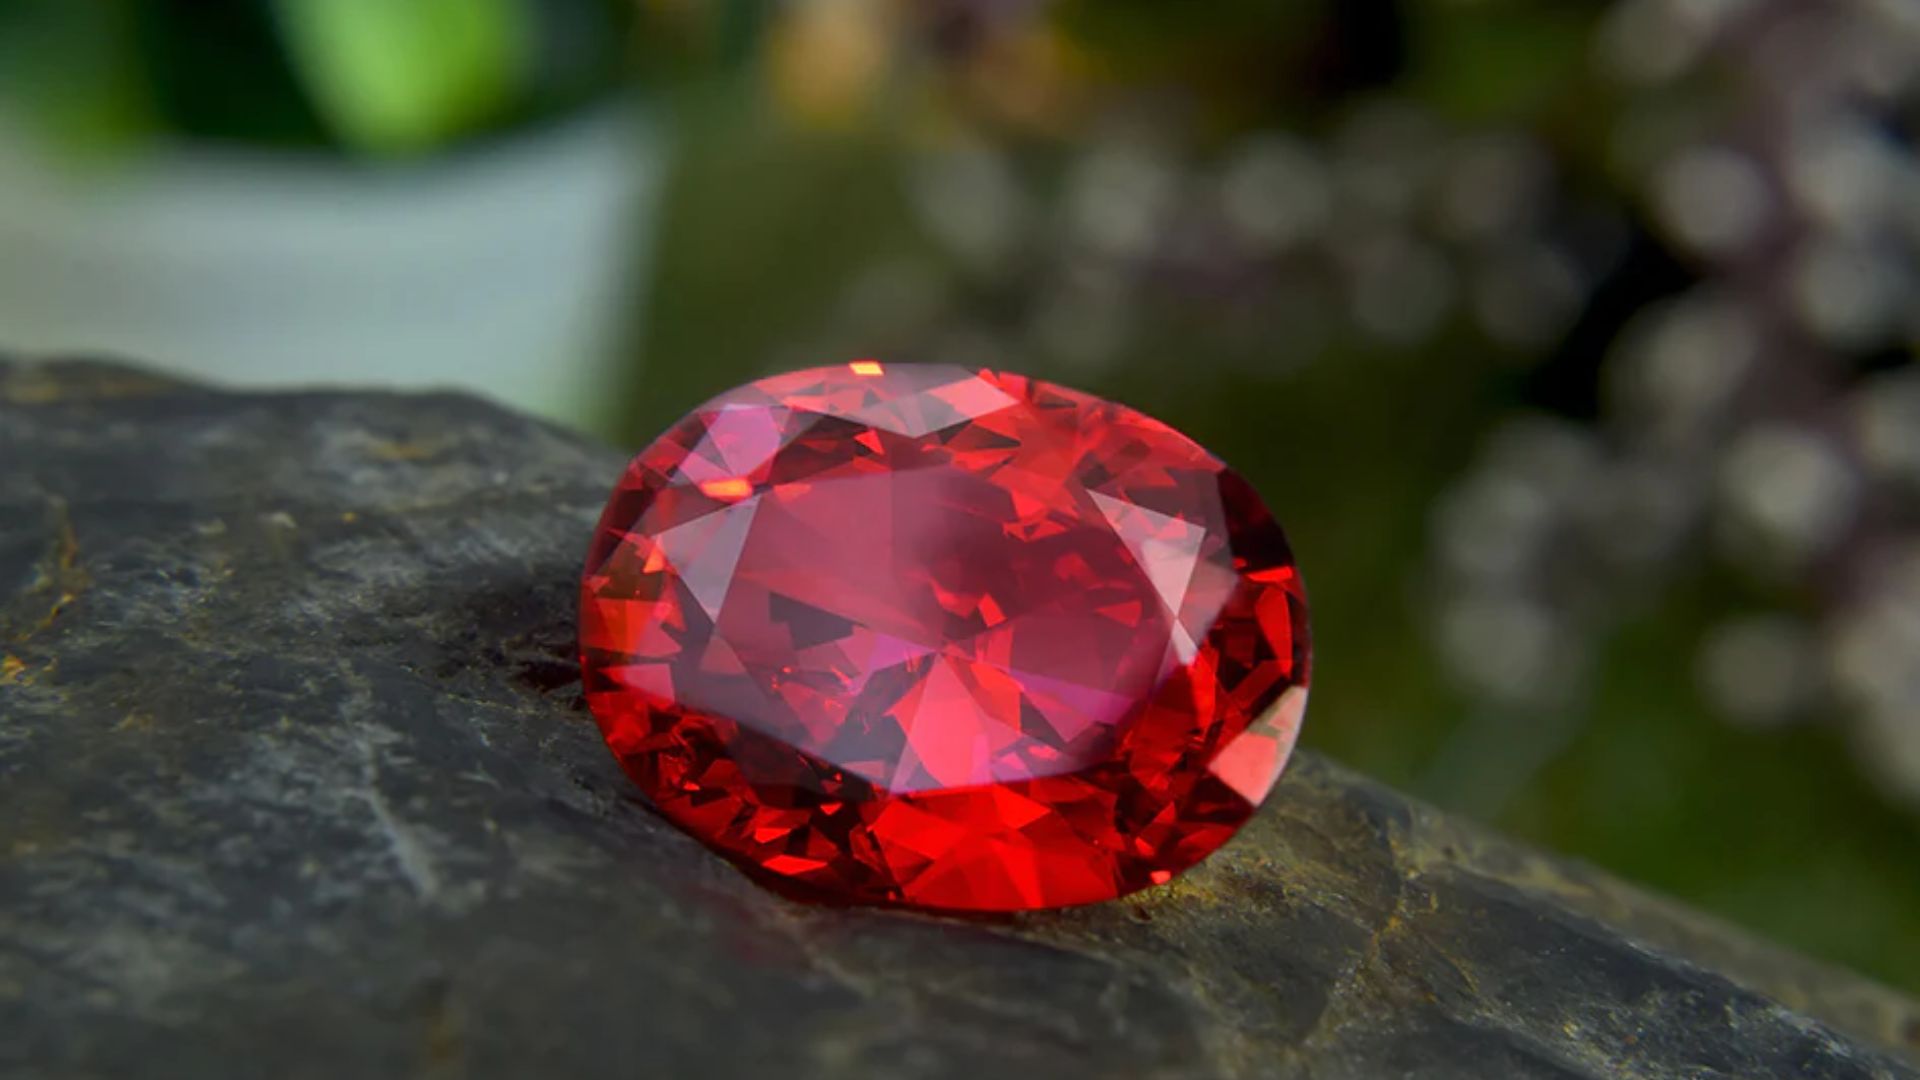 Red Gemstone On A Plain Rock